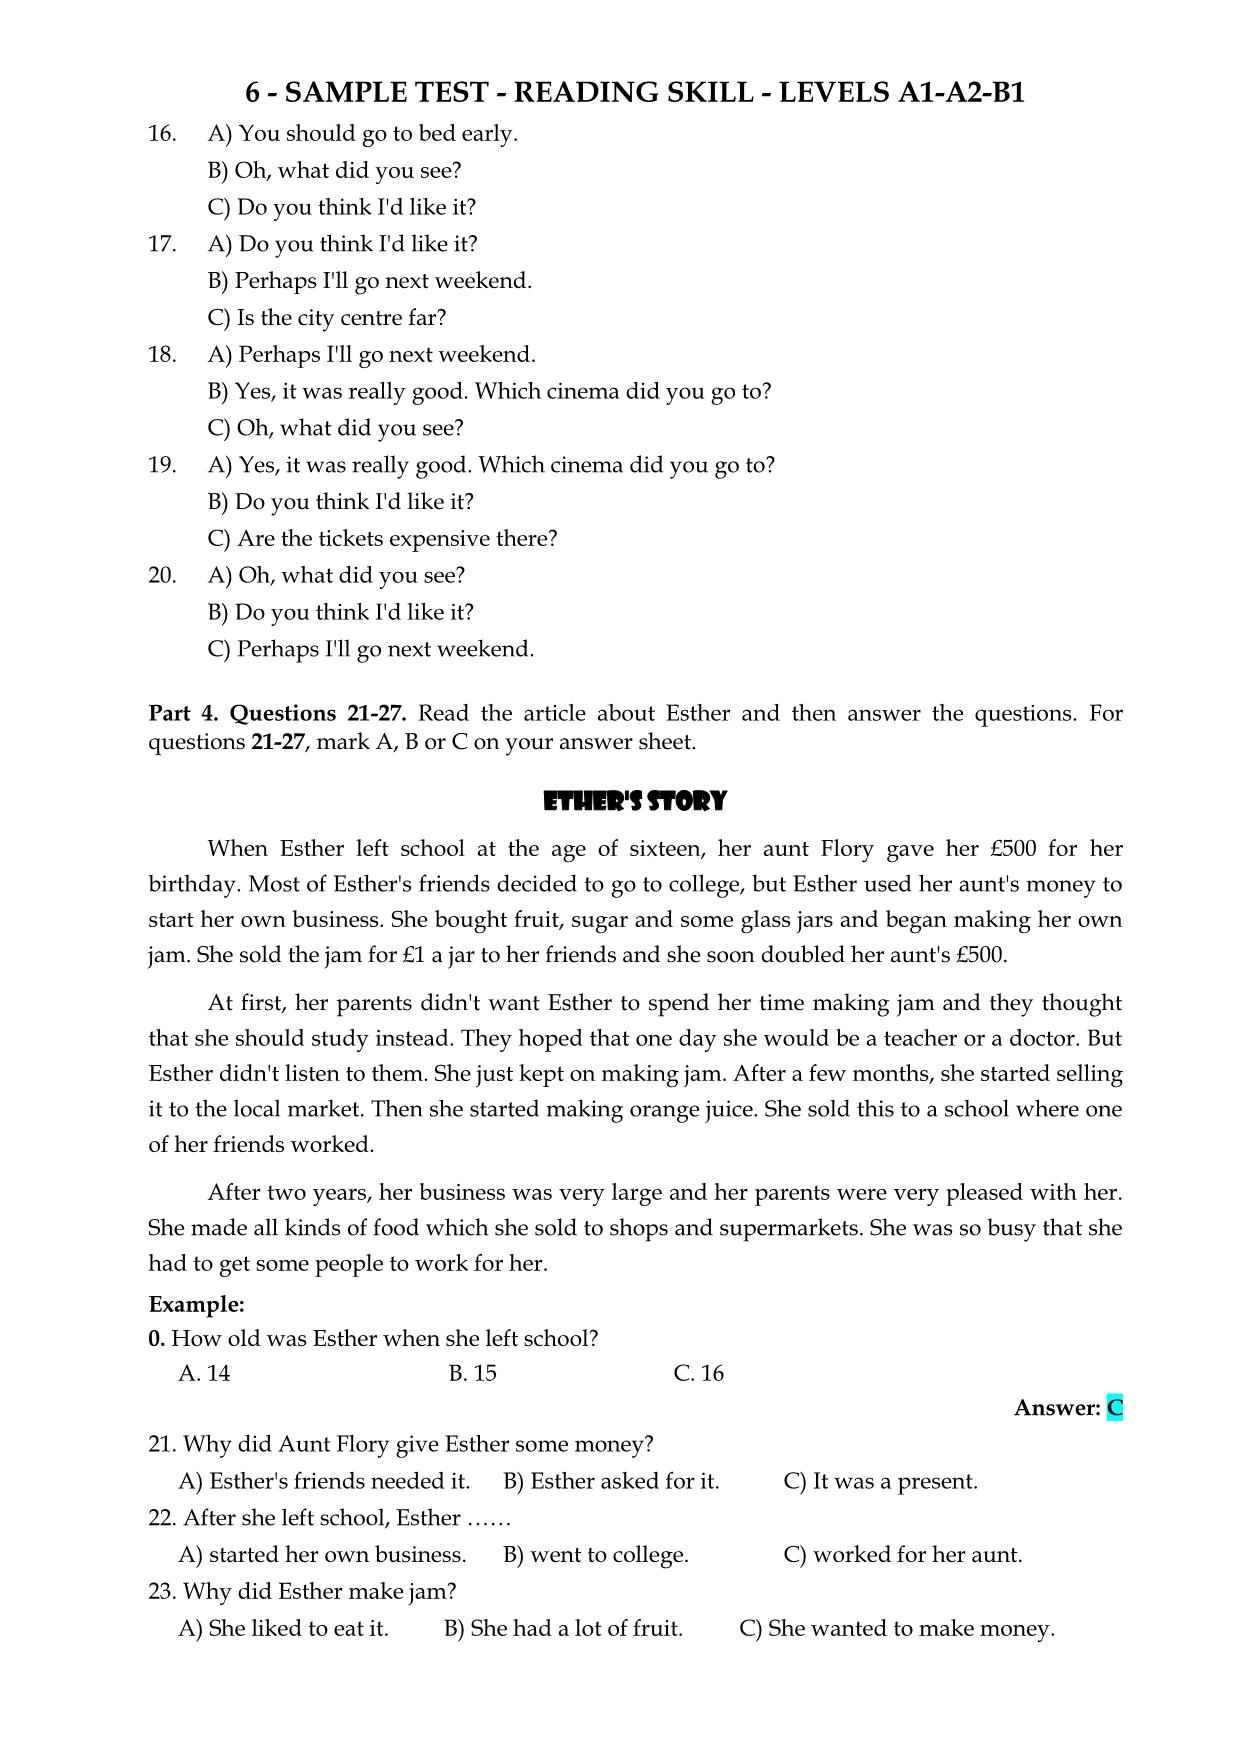 Sample test - Reading skill - levels A1 - A2 - B1 trang 7